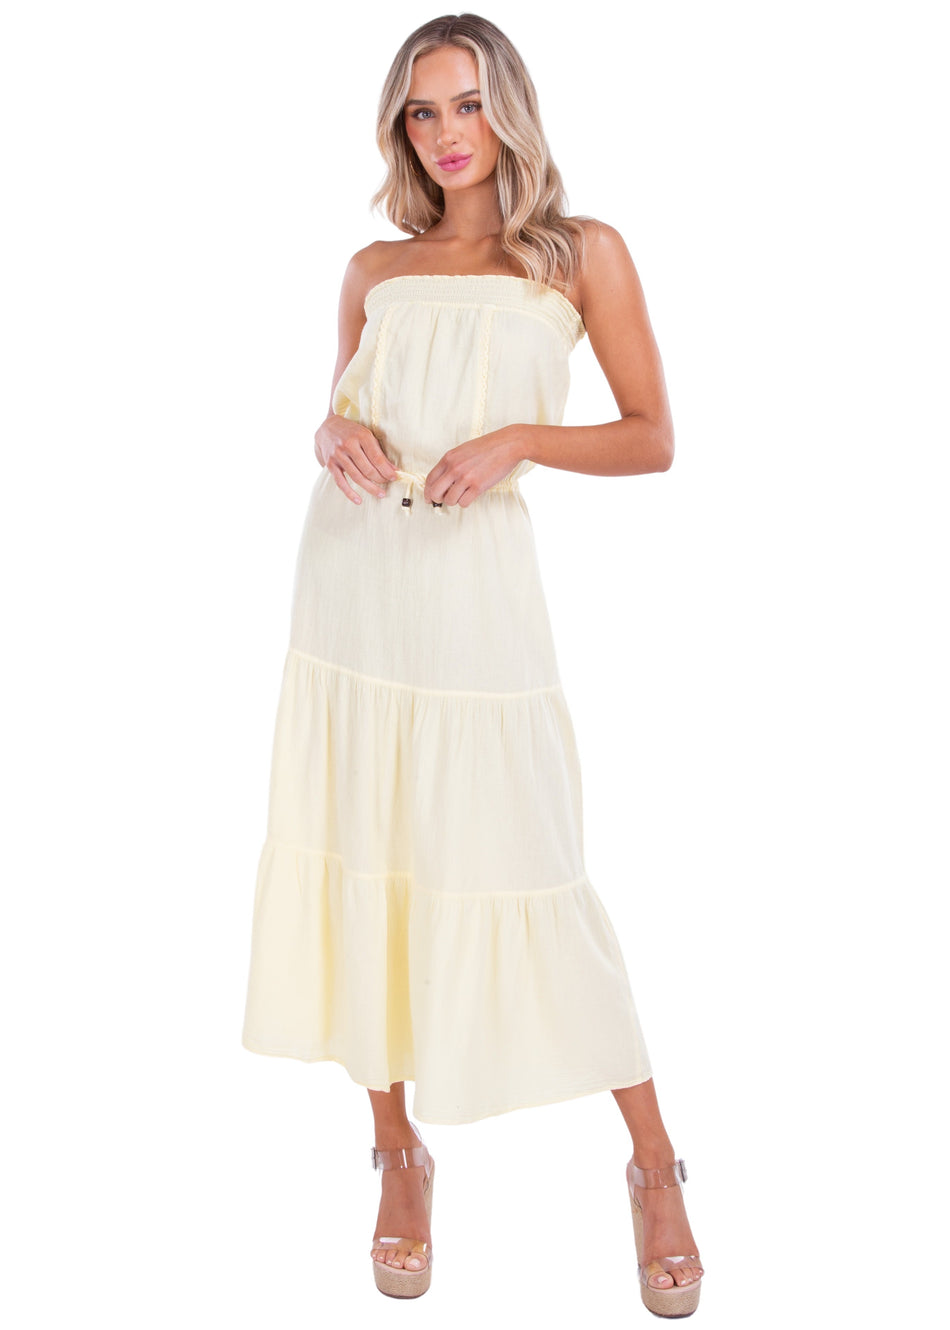 'Cielo' White Cotton Dress